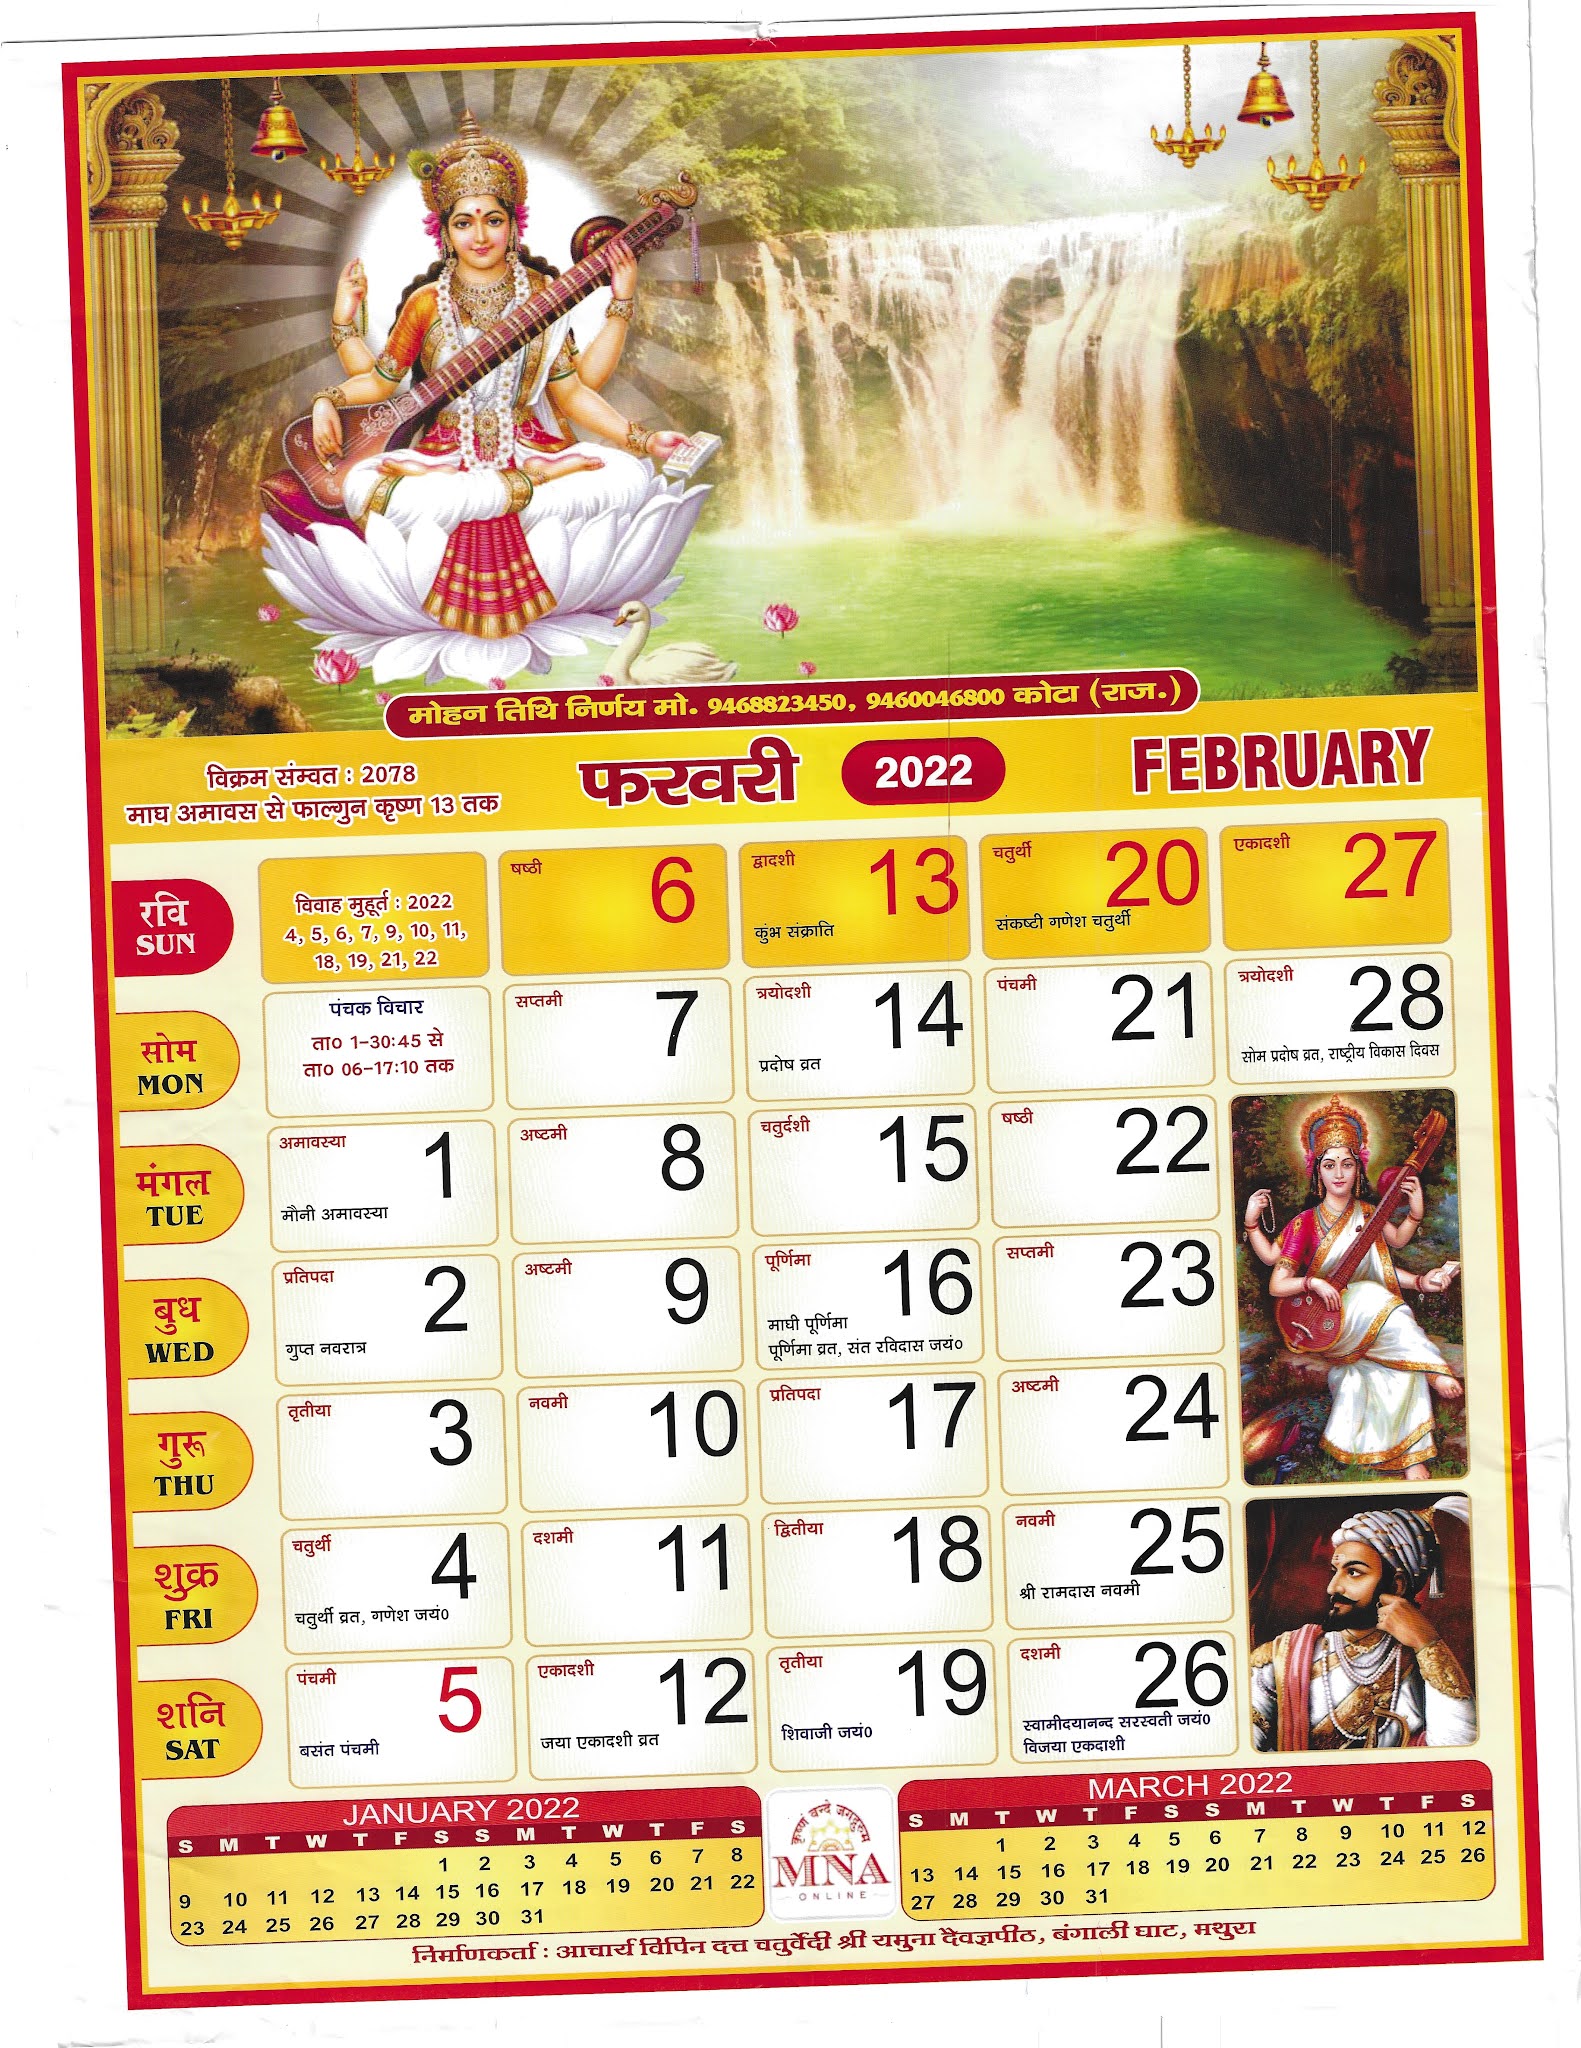 hindu-calendar-2022-pdf-download-hindu-panchang-2022-vikram-samvat-2078-79-in-hindi-2022